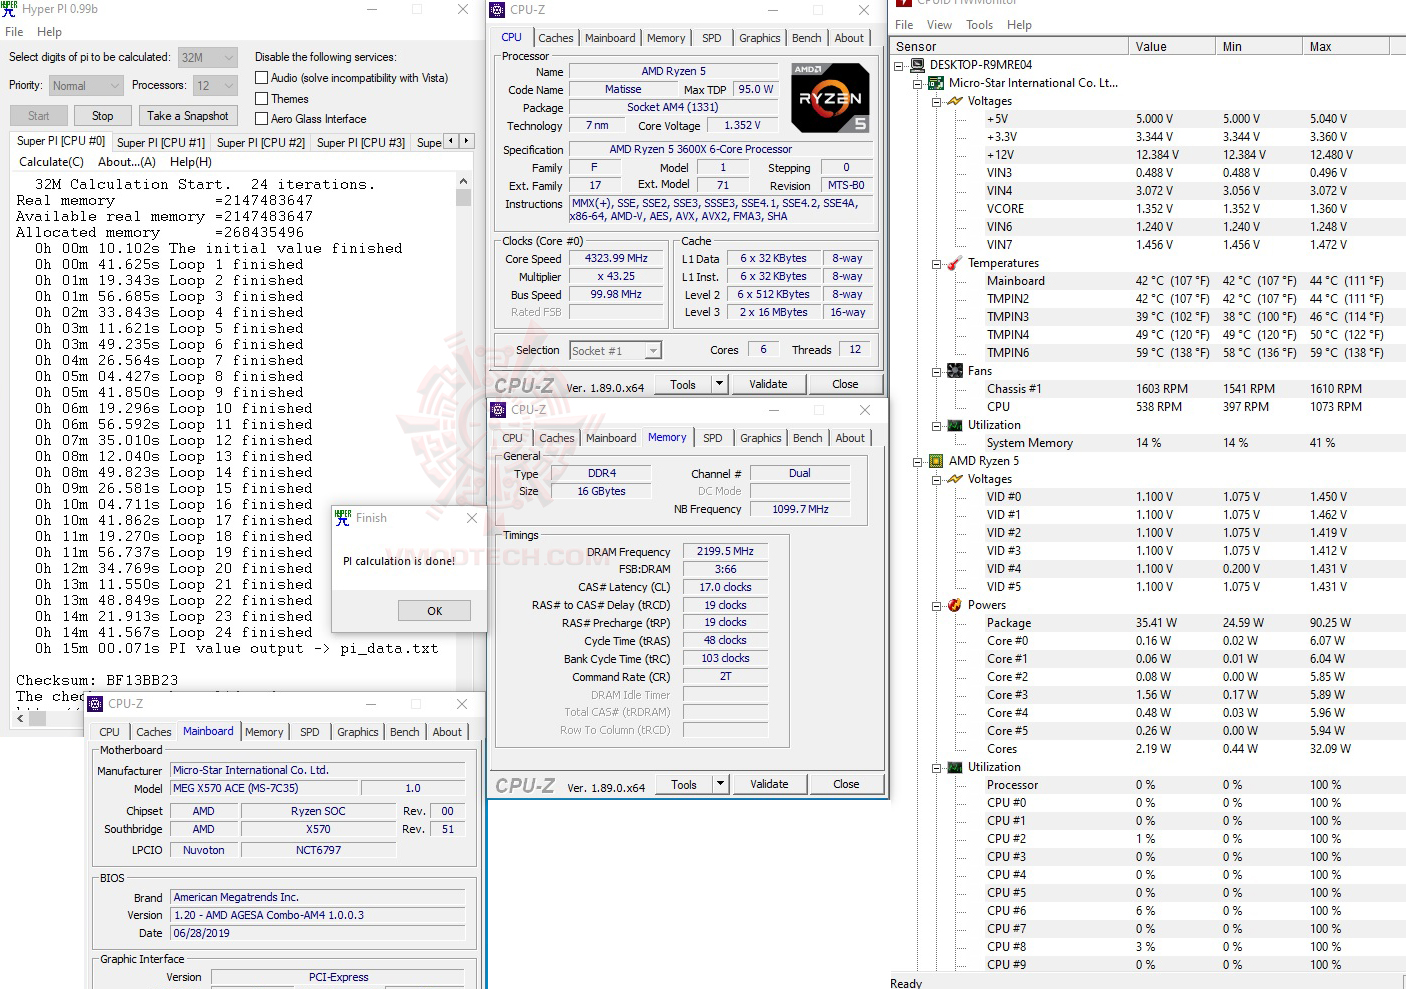 h32 oc 1 AMD RYZEN 5 3600X PROCESSOR REVIEW 